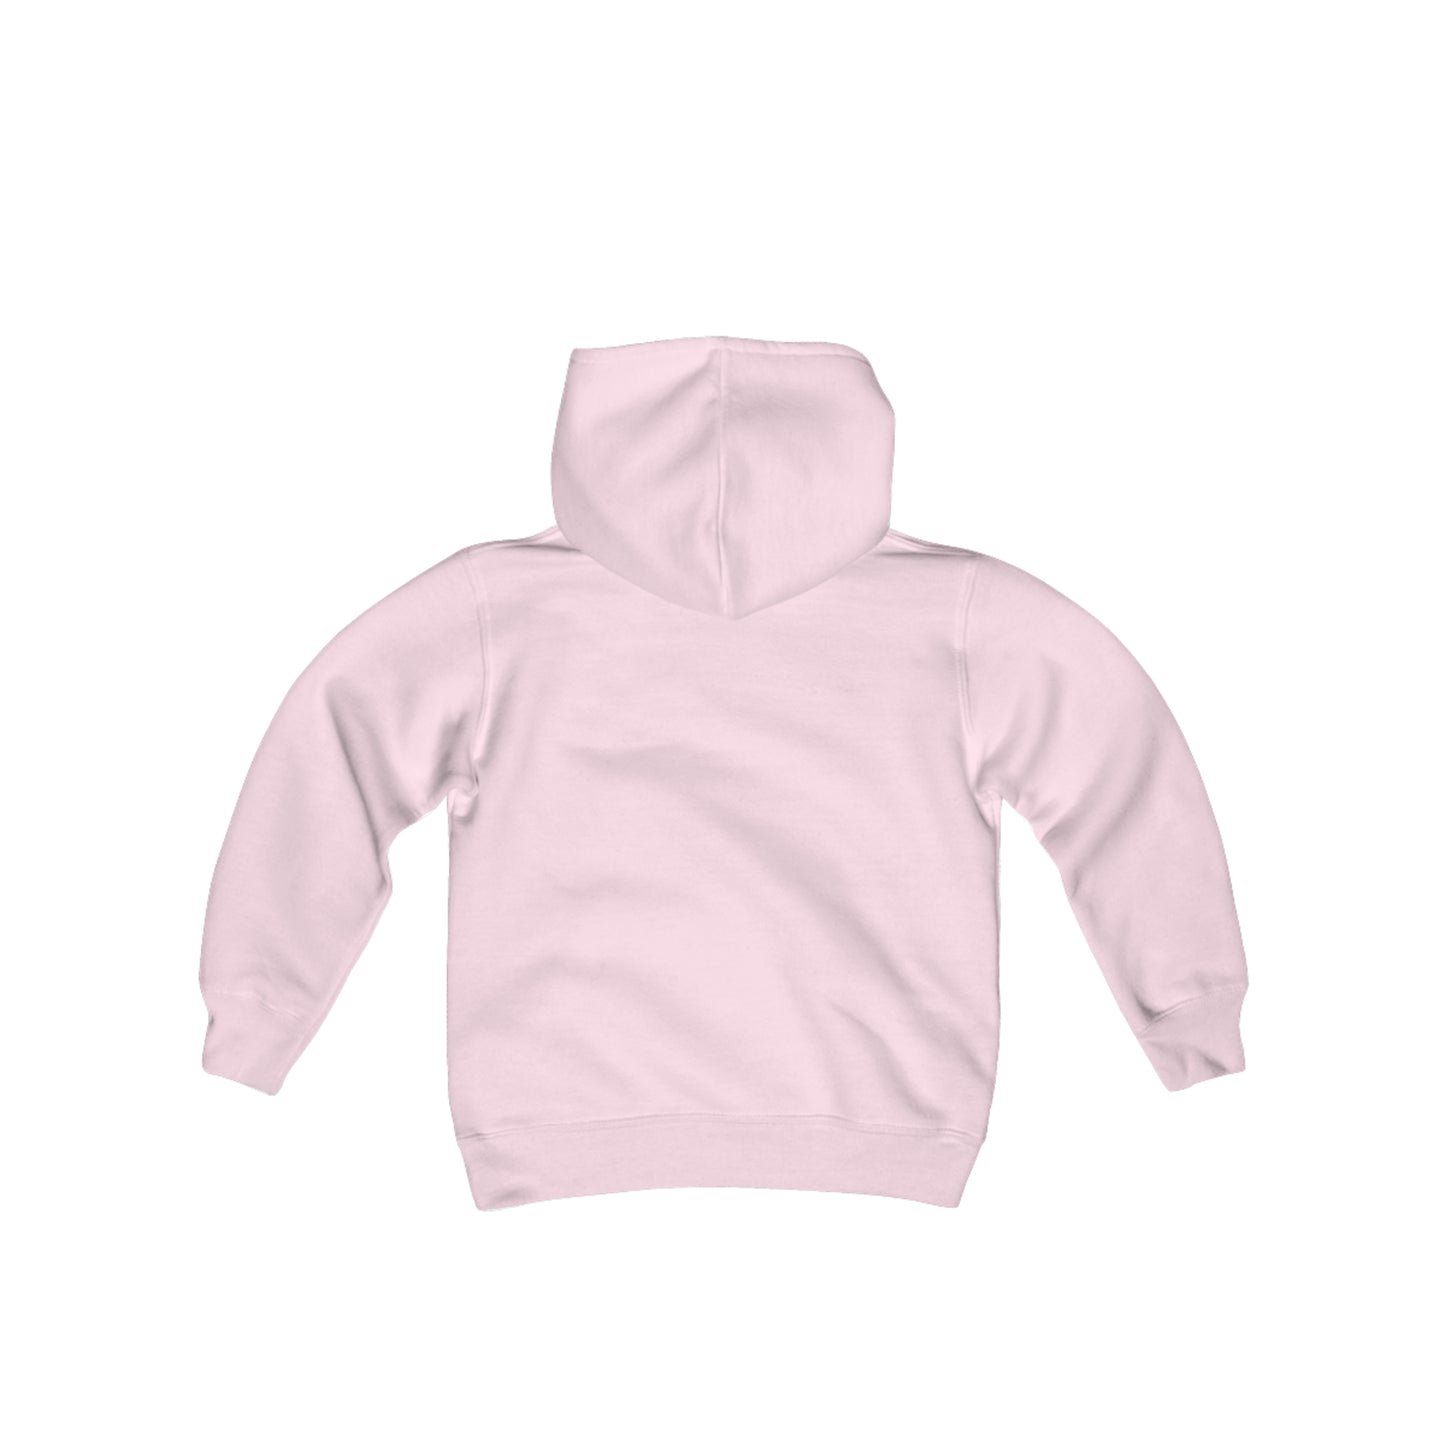 Youth Heavy Blend Hooded Sweatshirt Order Id:124047